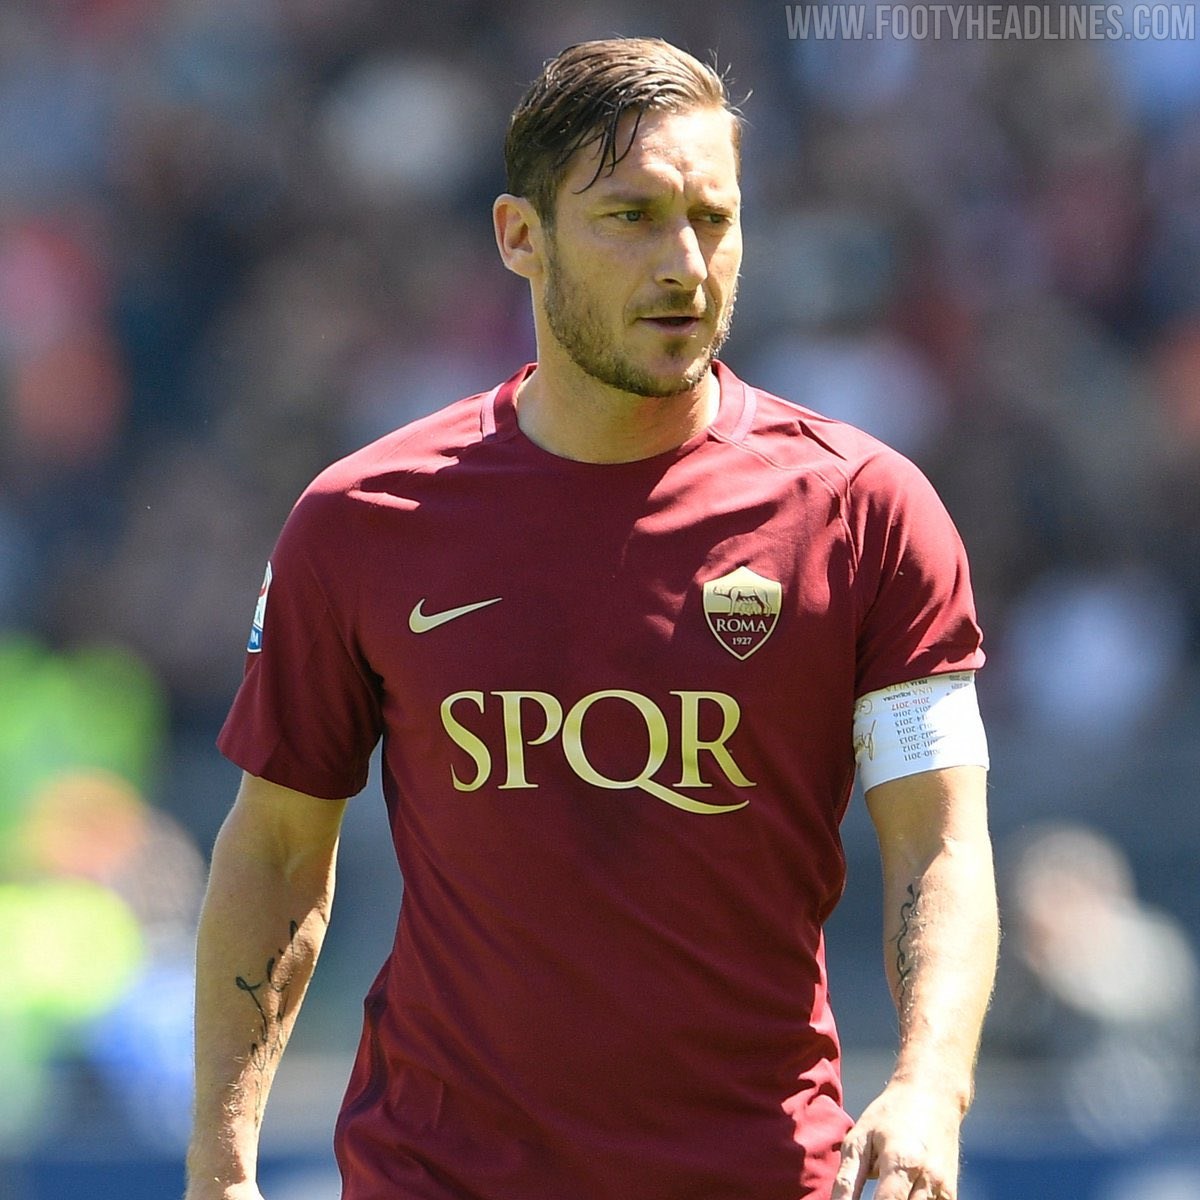 Confirmed: AS Roma Bring Back 'SPQR' on Kits - Footy Headlines